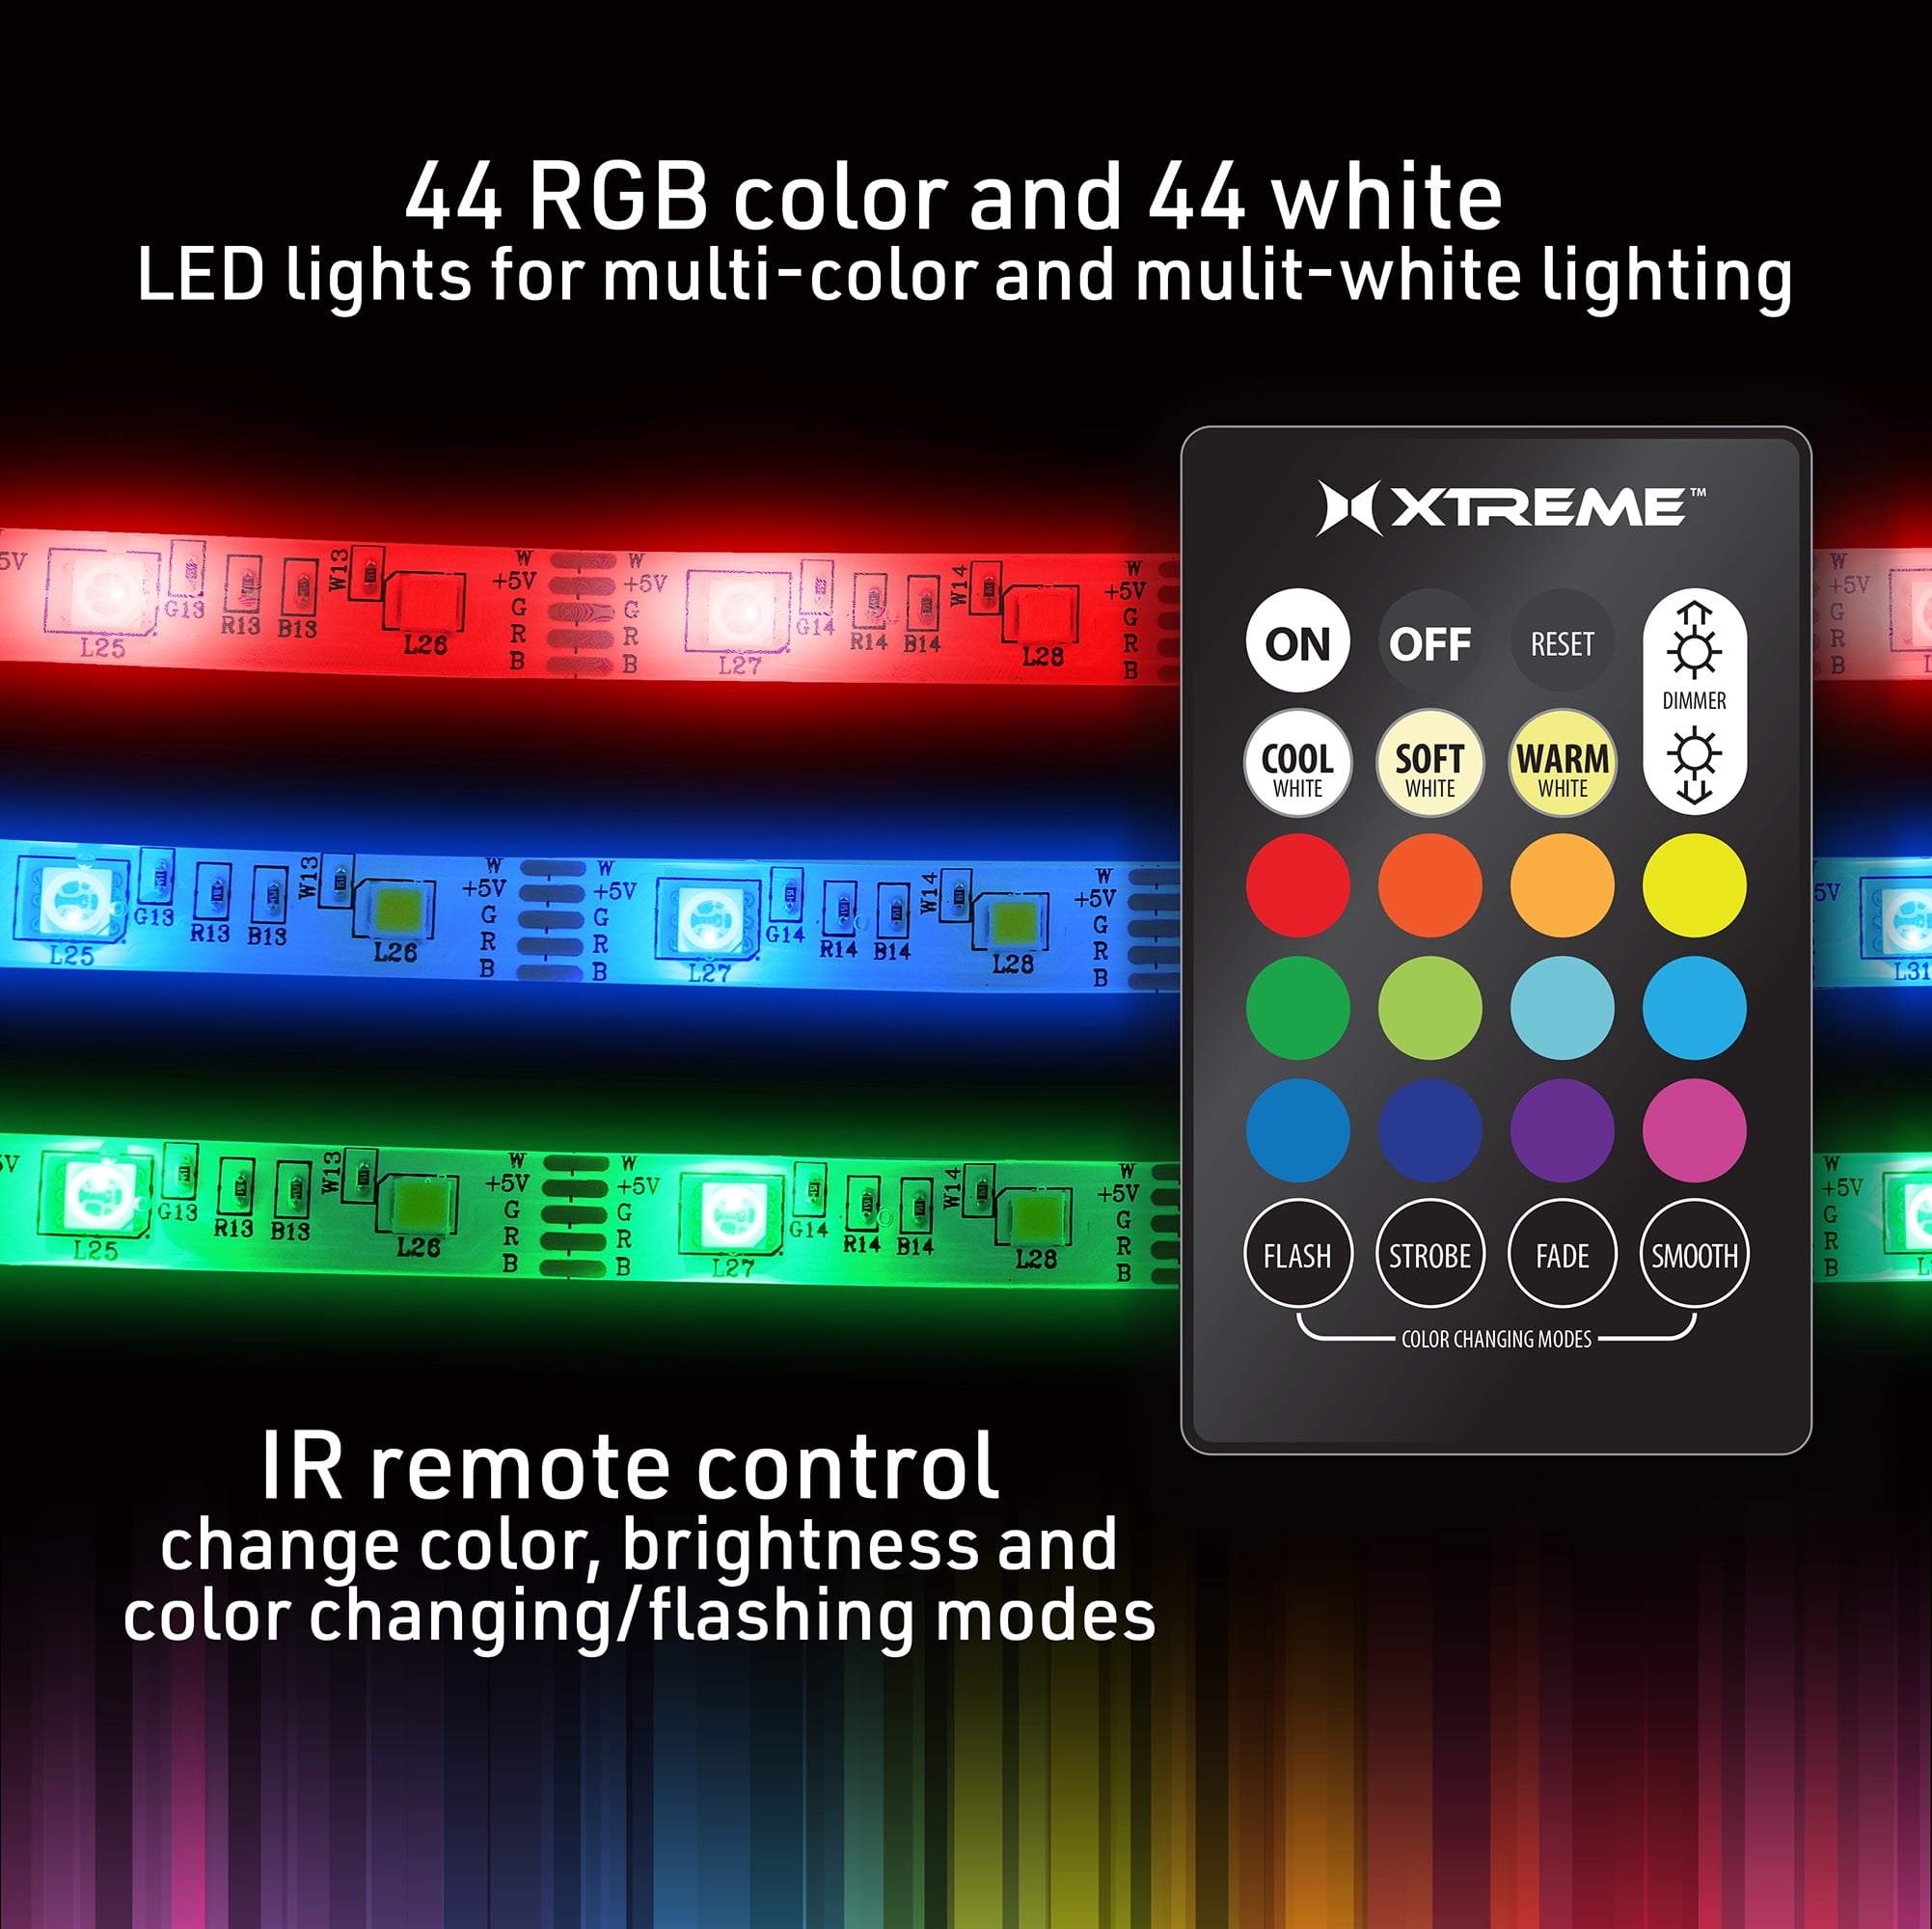 TASMOR 10M LED Strip Light, RGB Color Changing USB Light Strips with  Remote, Music Sync, App Control, LED Lights